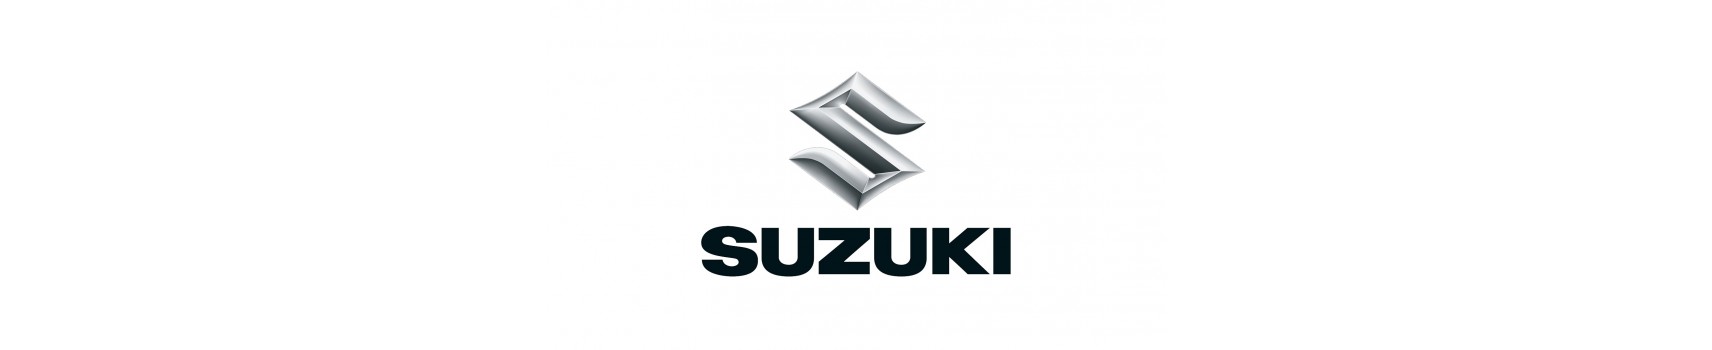 Suzuki akcesoria offroad, wyposażenie Suzuki terenowe